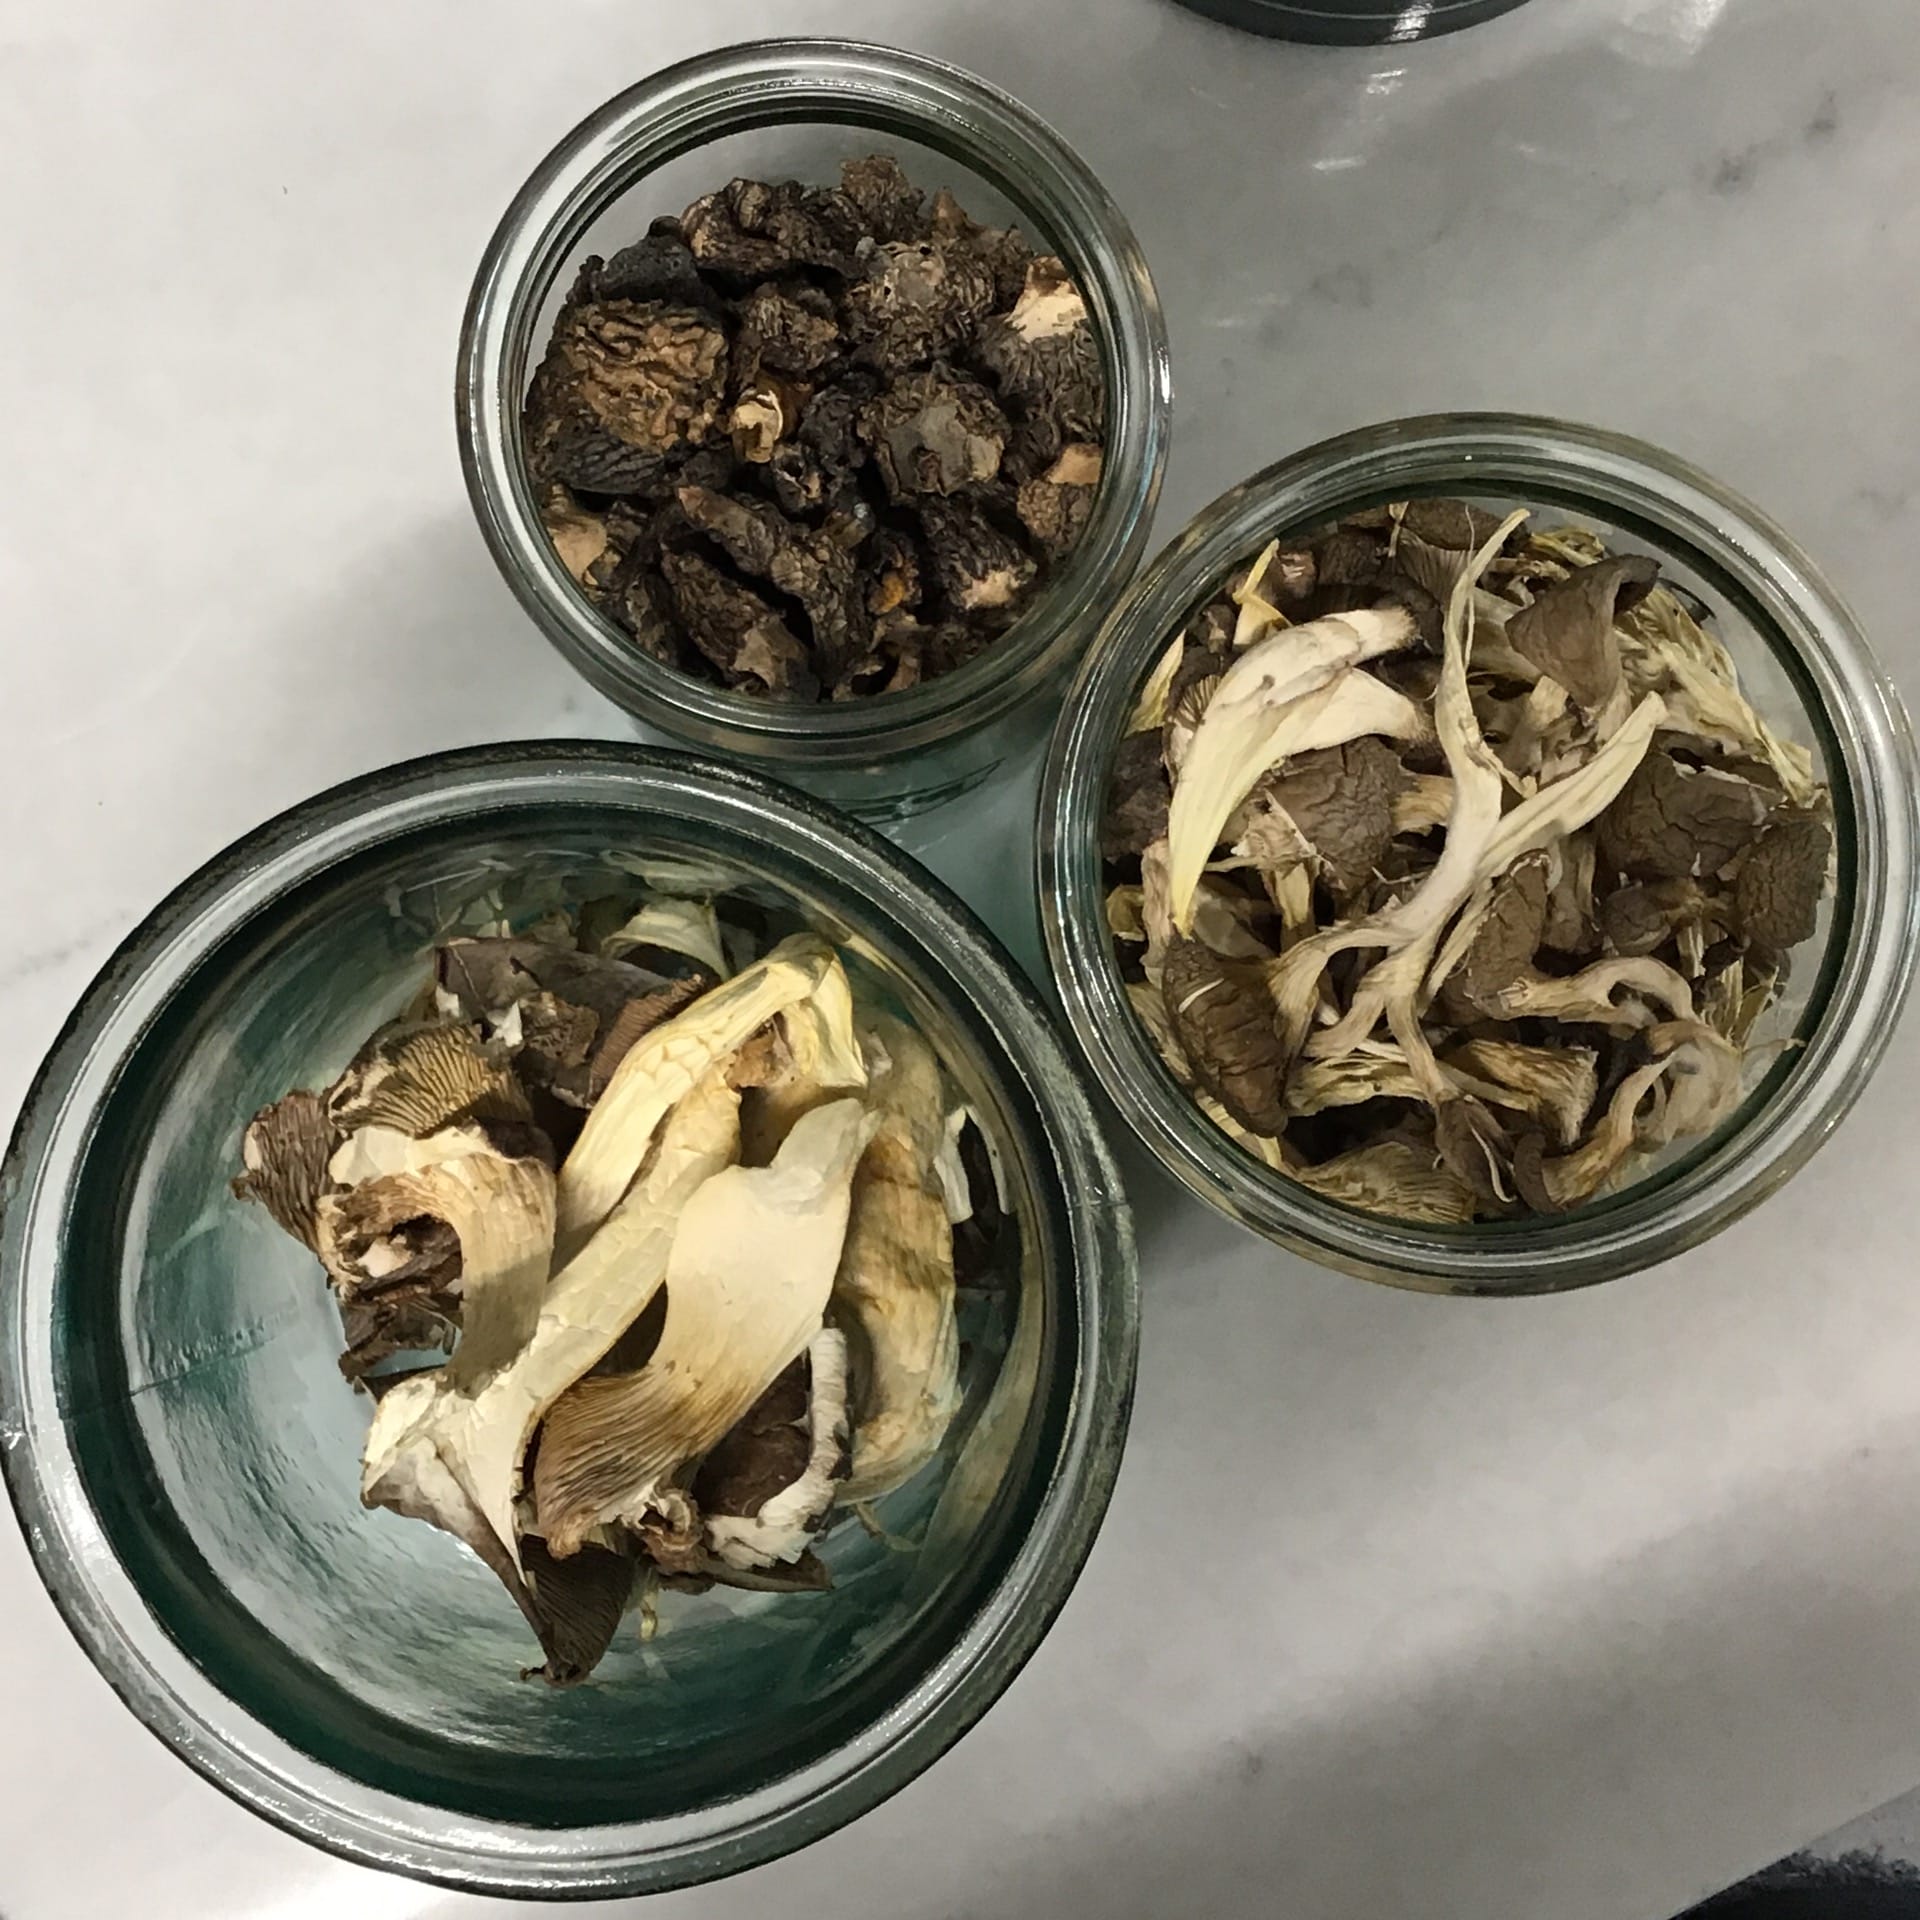 dried mushrooms many varieties